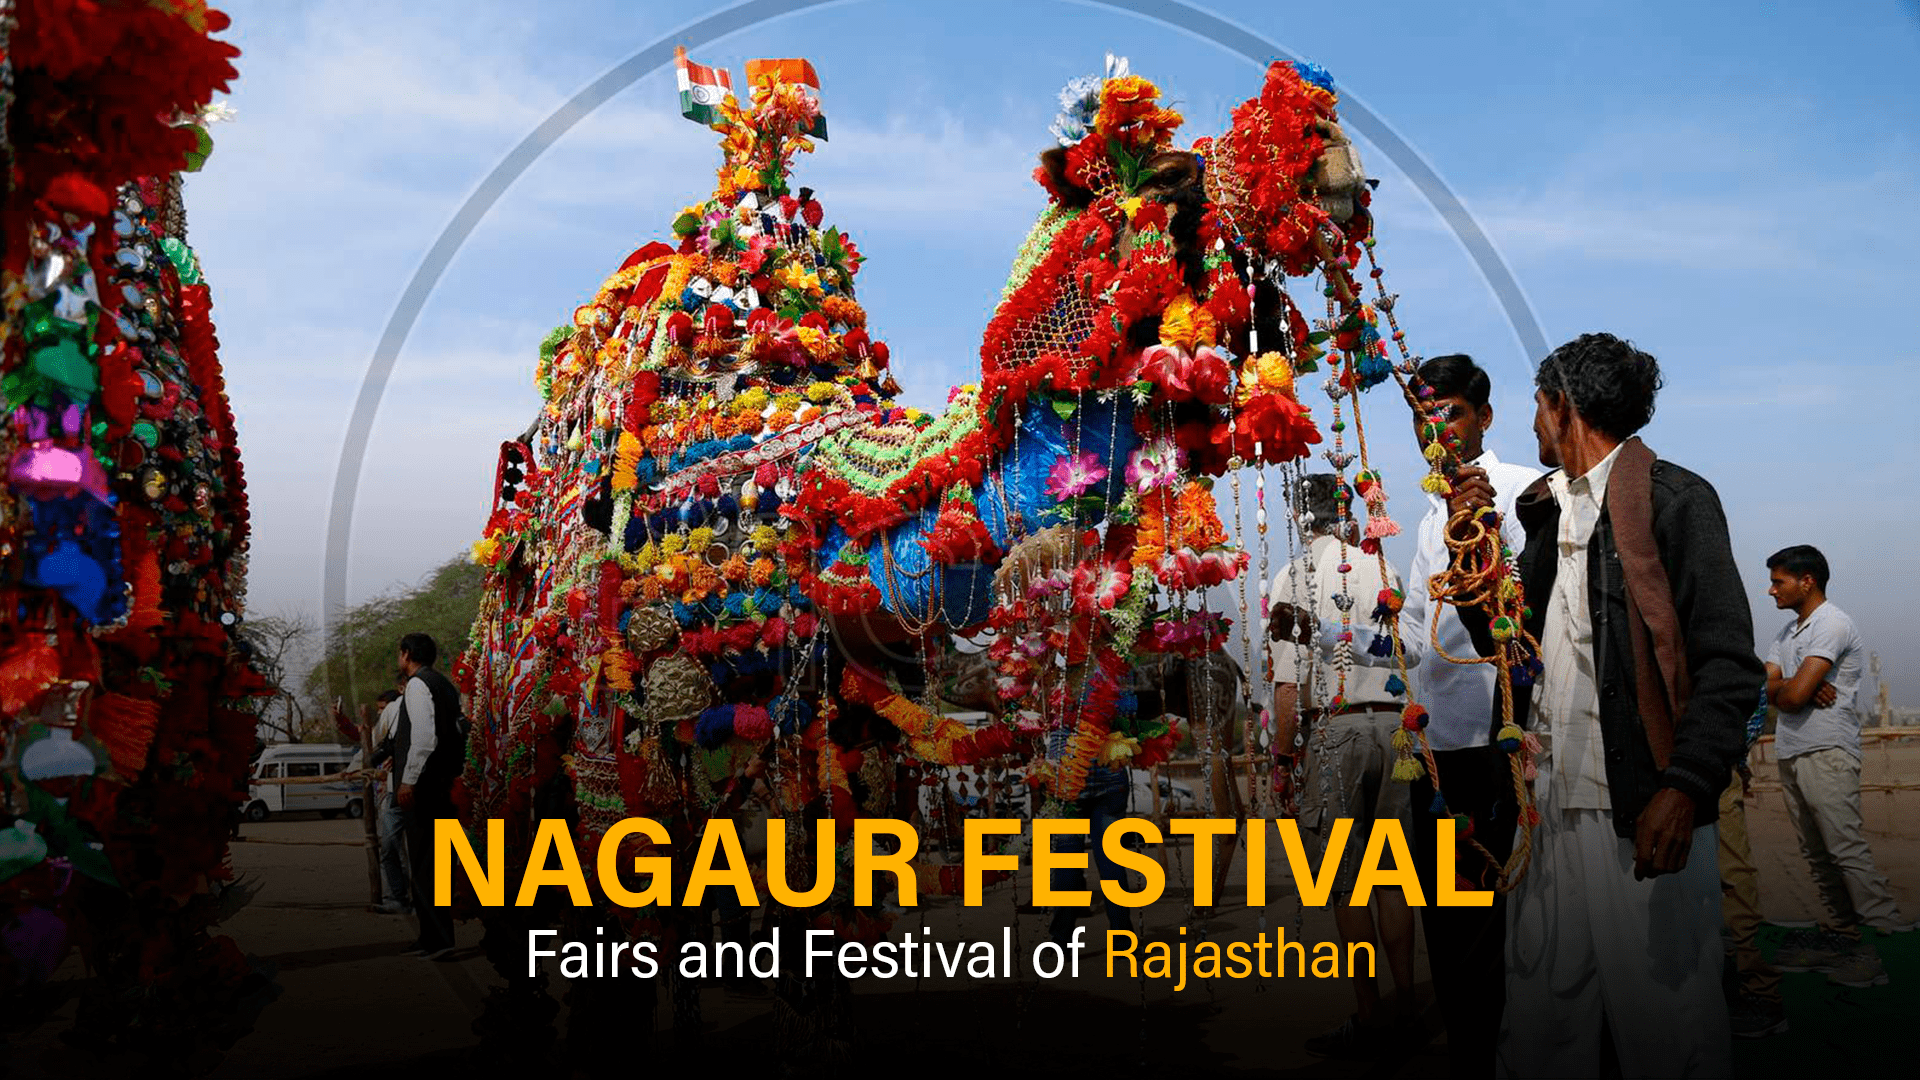 Nagaur Festival- Fairs and Festival of Rajasthan